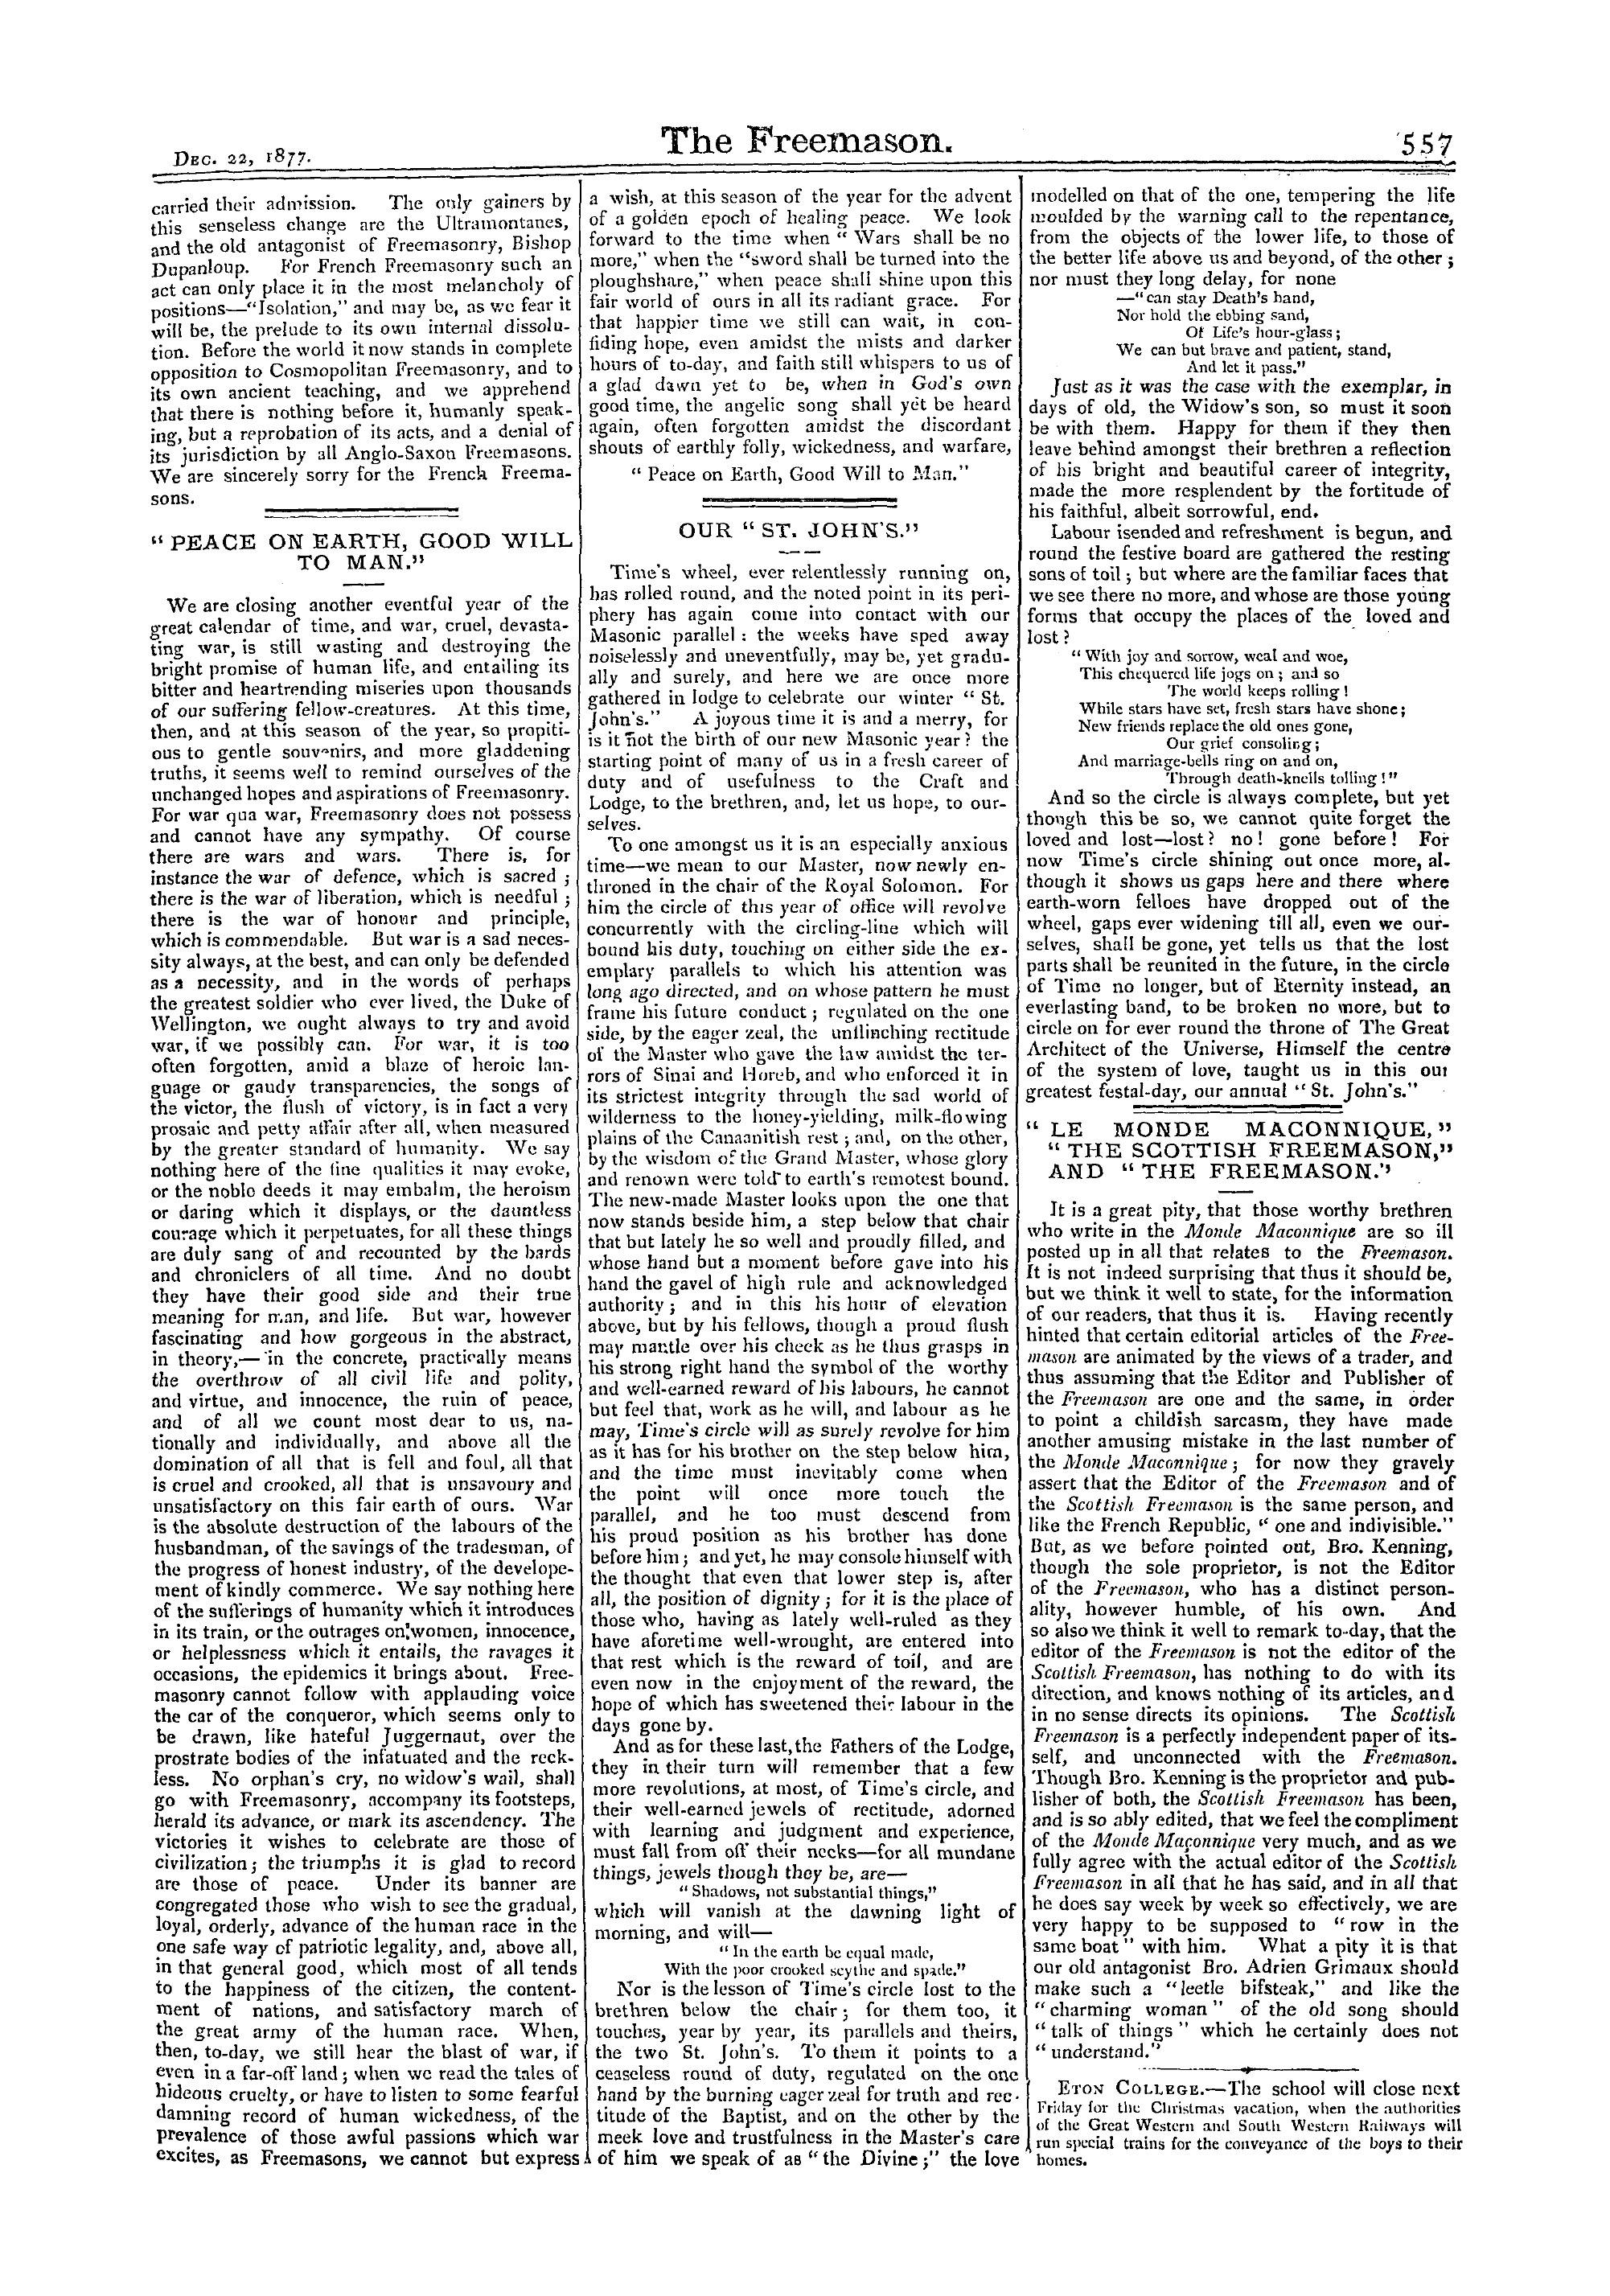 The Freemason: 1877-12-22 - " Le Monde Maconnique, " " The Scottish Freemason," And " The Freemason.' '